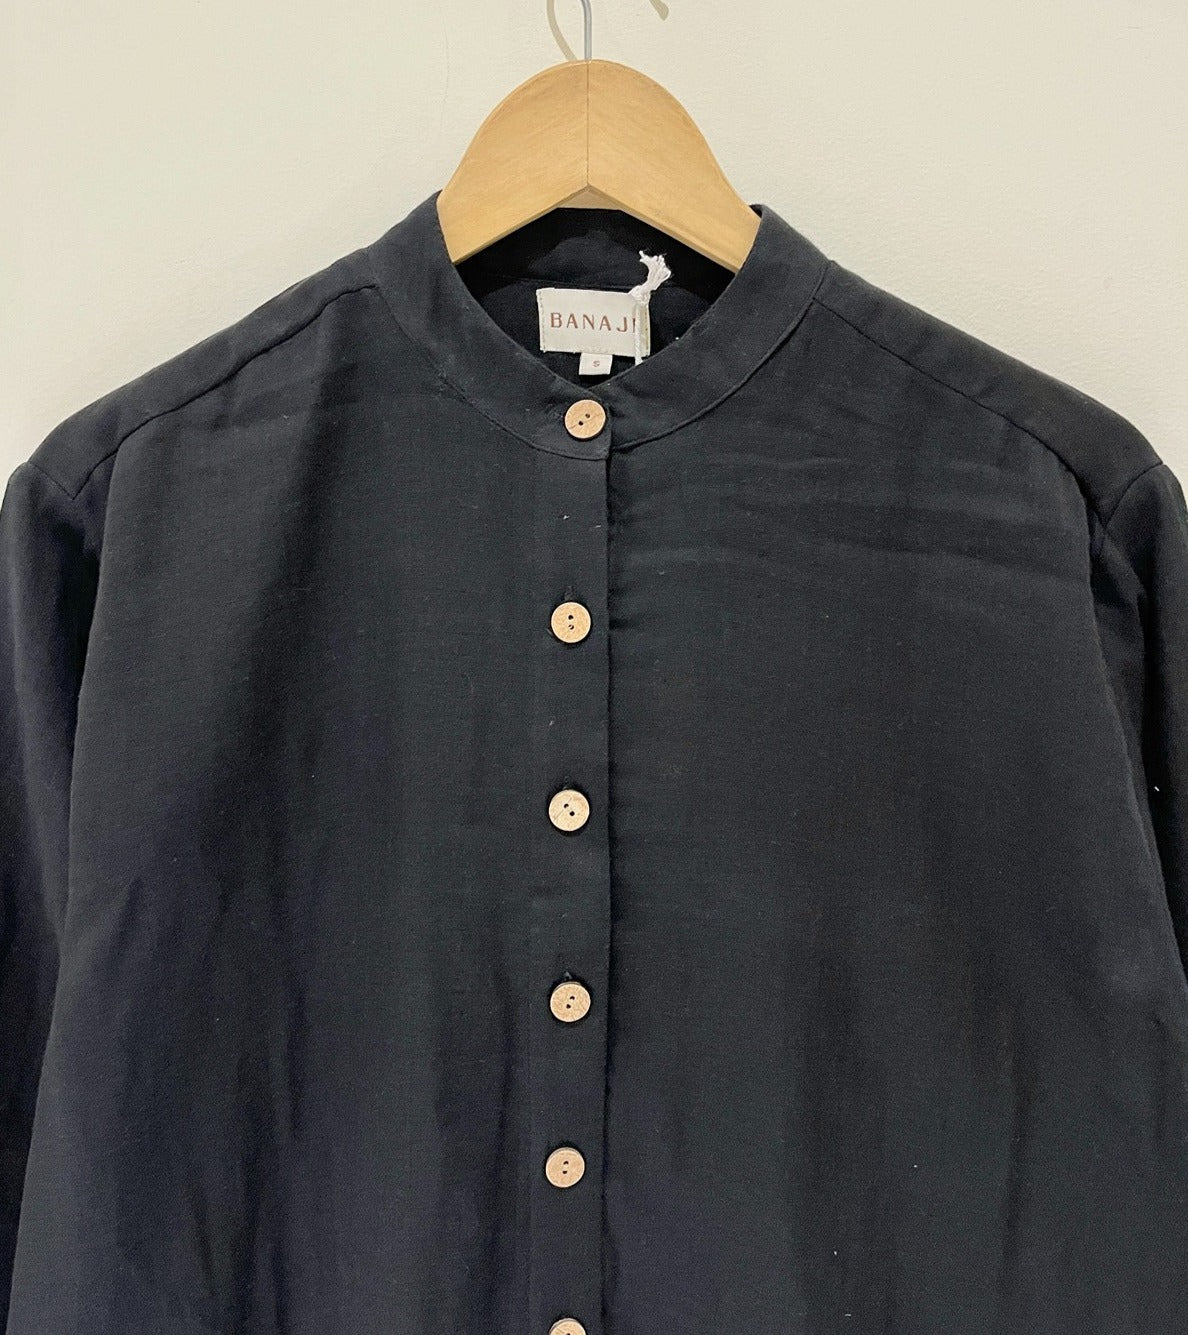 Black Cotton Shirt Style Top